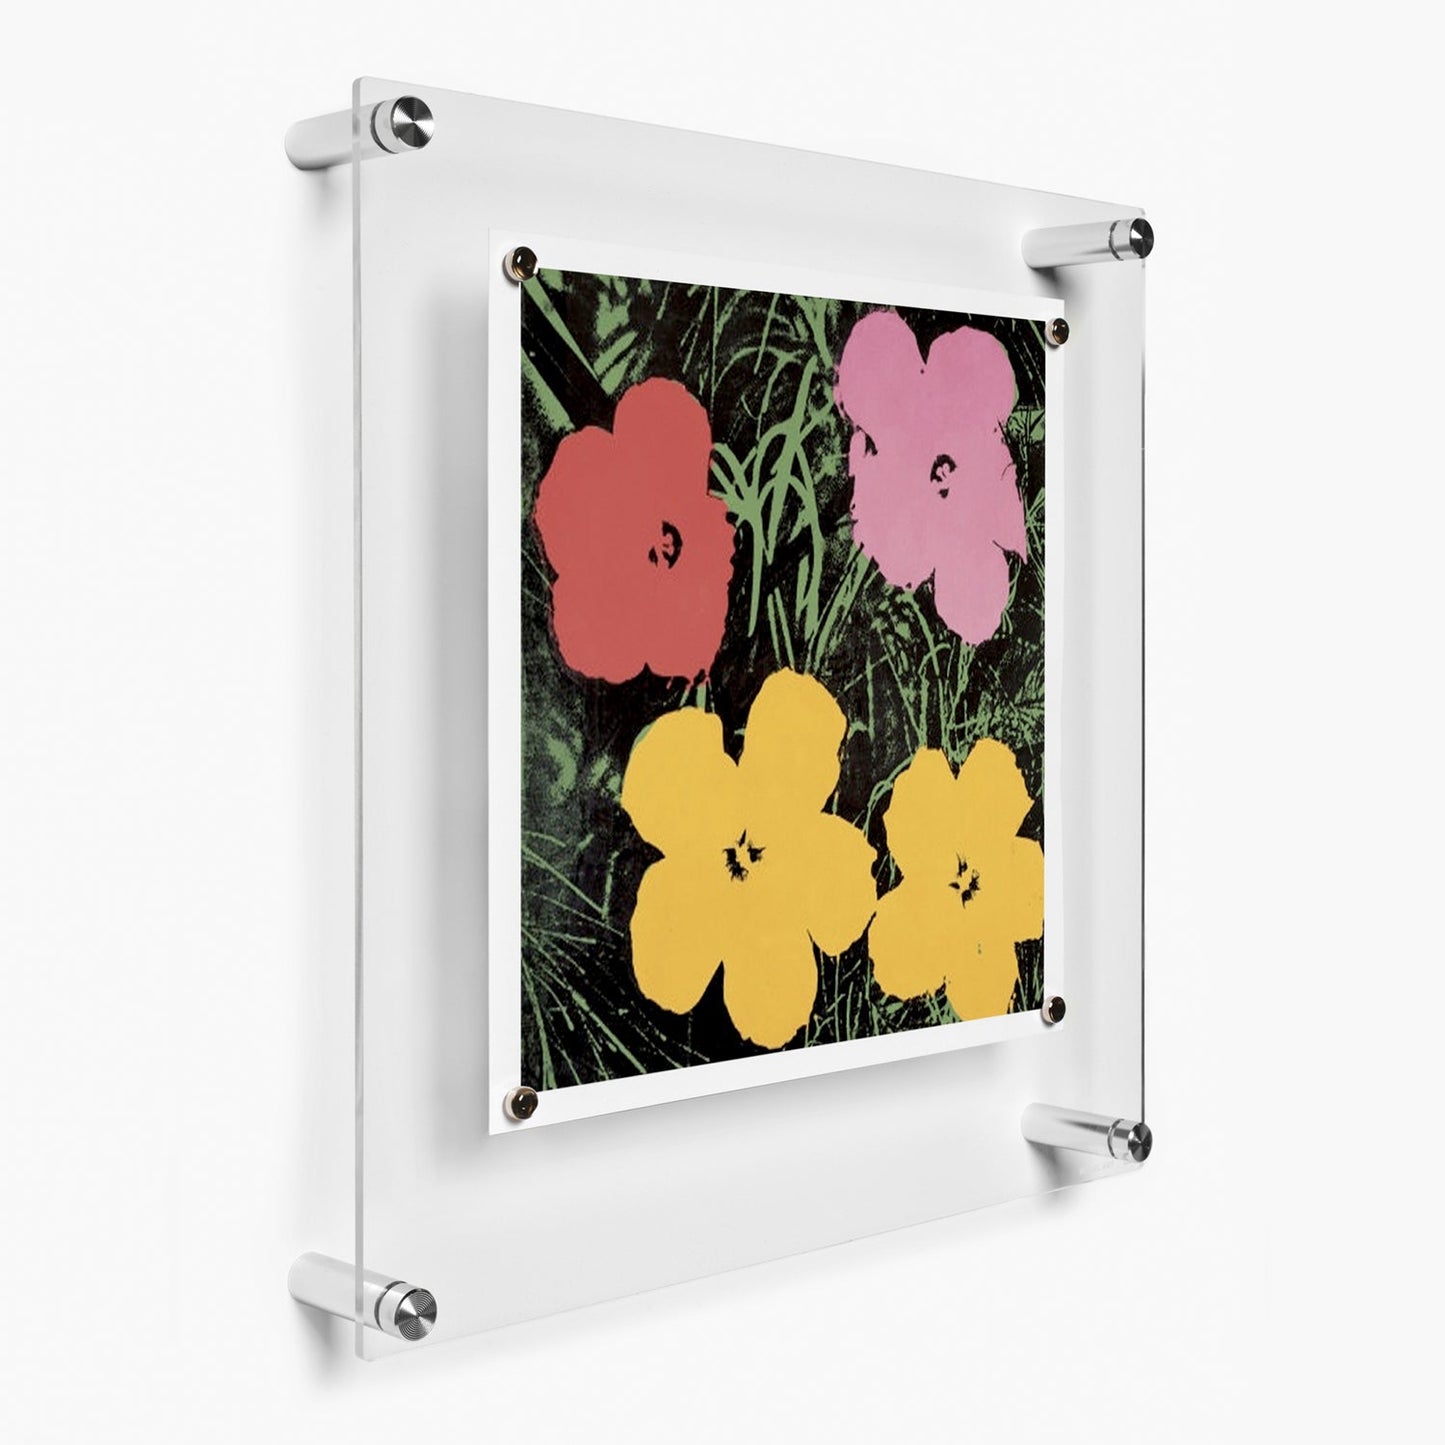 WS Single: 12" x 12" Single Panel Frame + Magnets